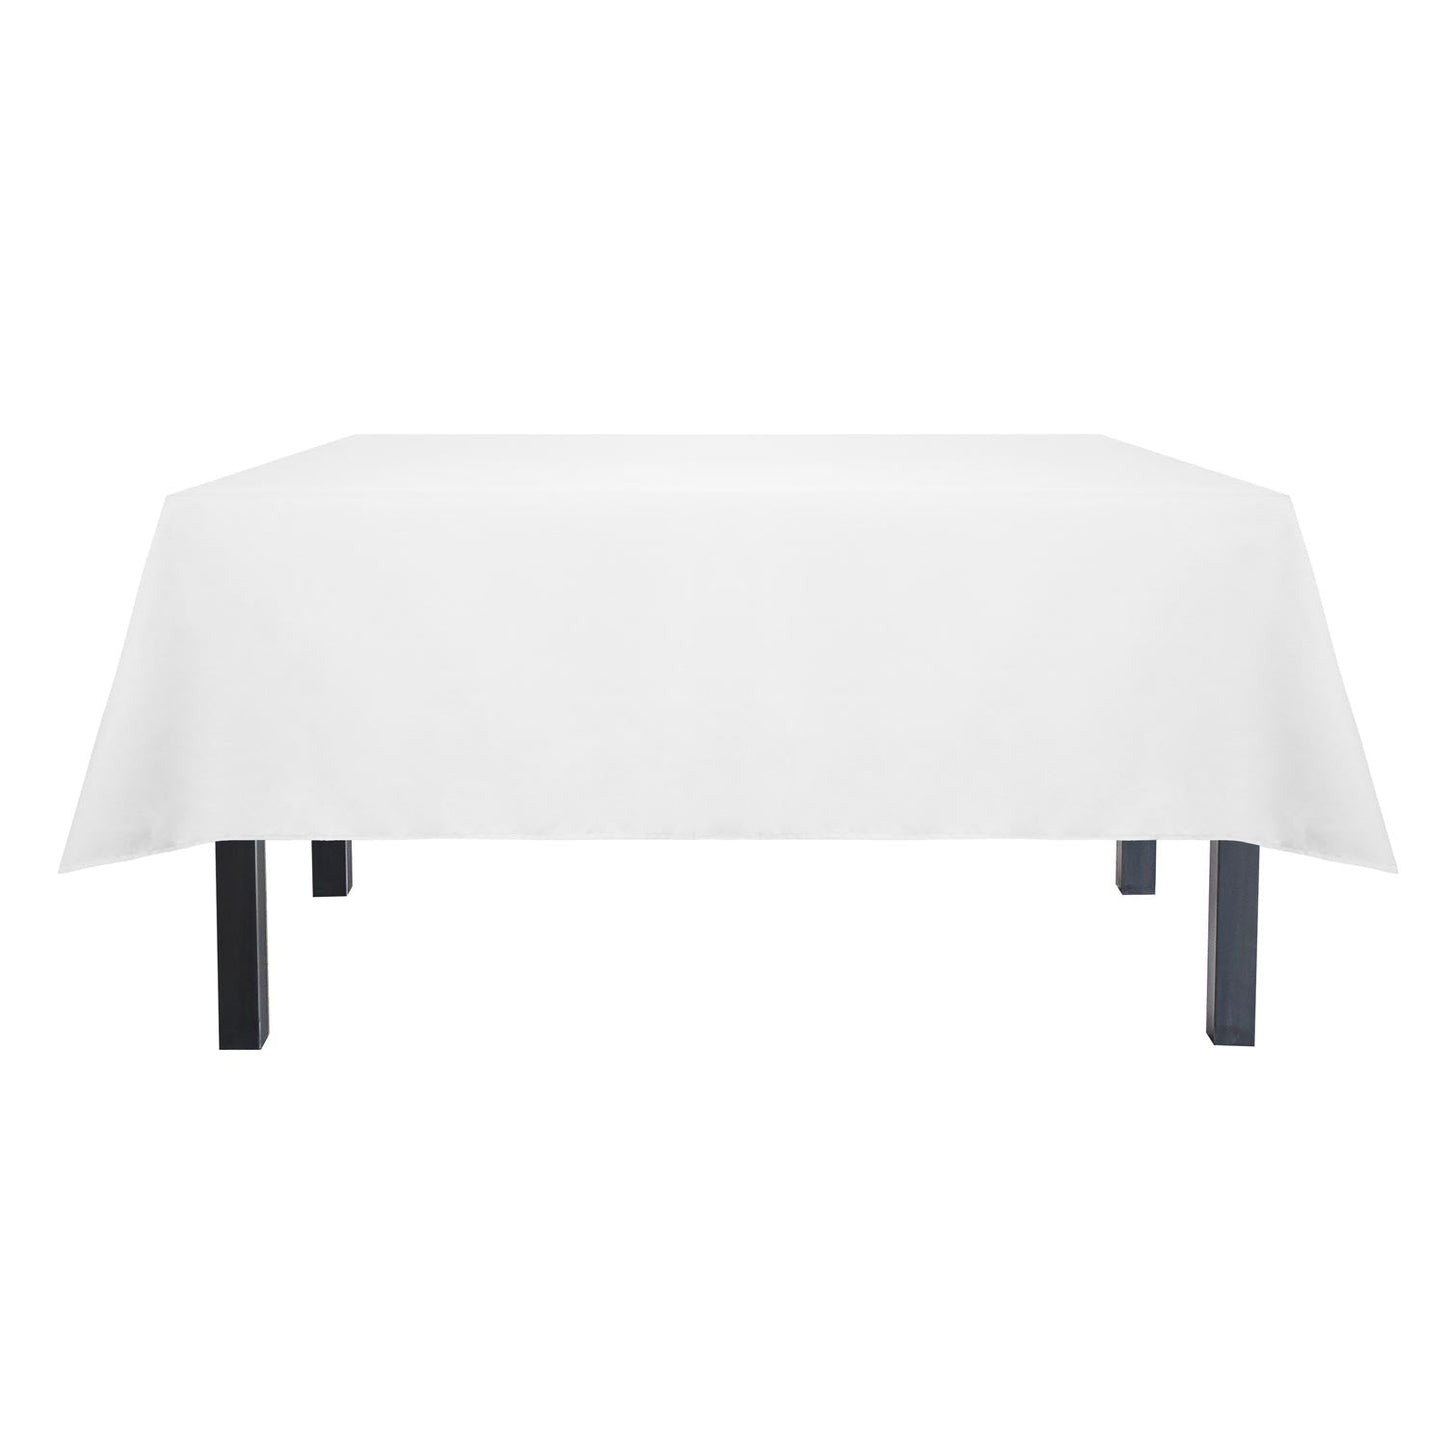 American Dawn | 52X72 Inch Milliken Signature White Tablecloth 